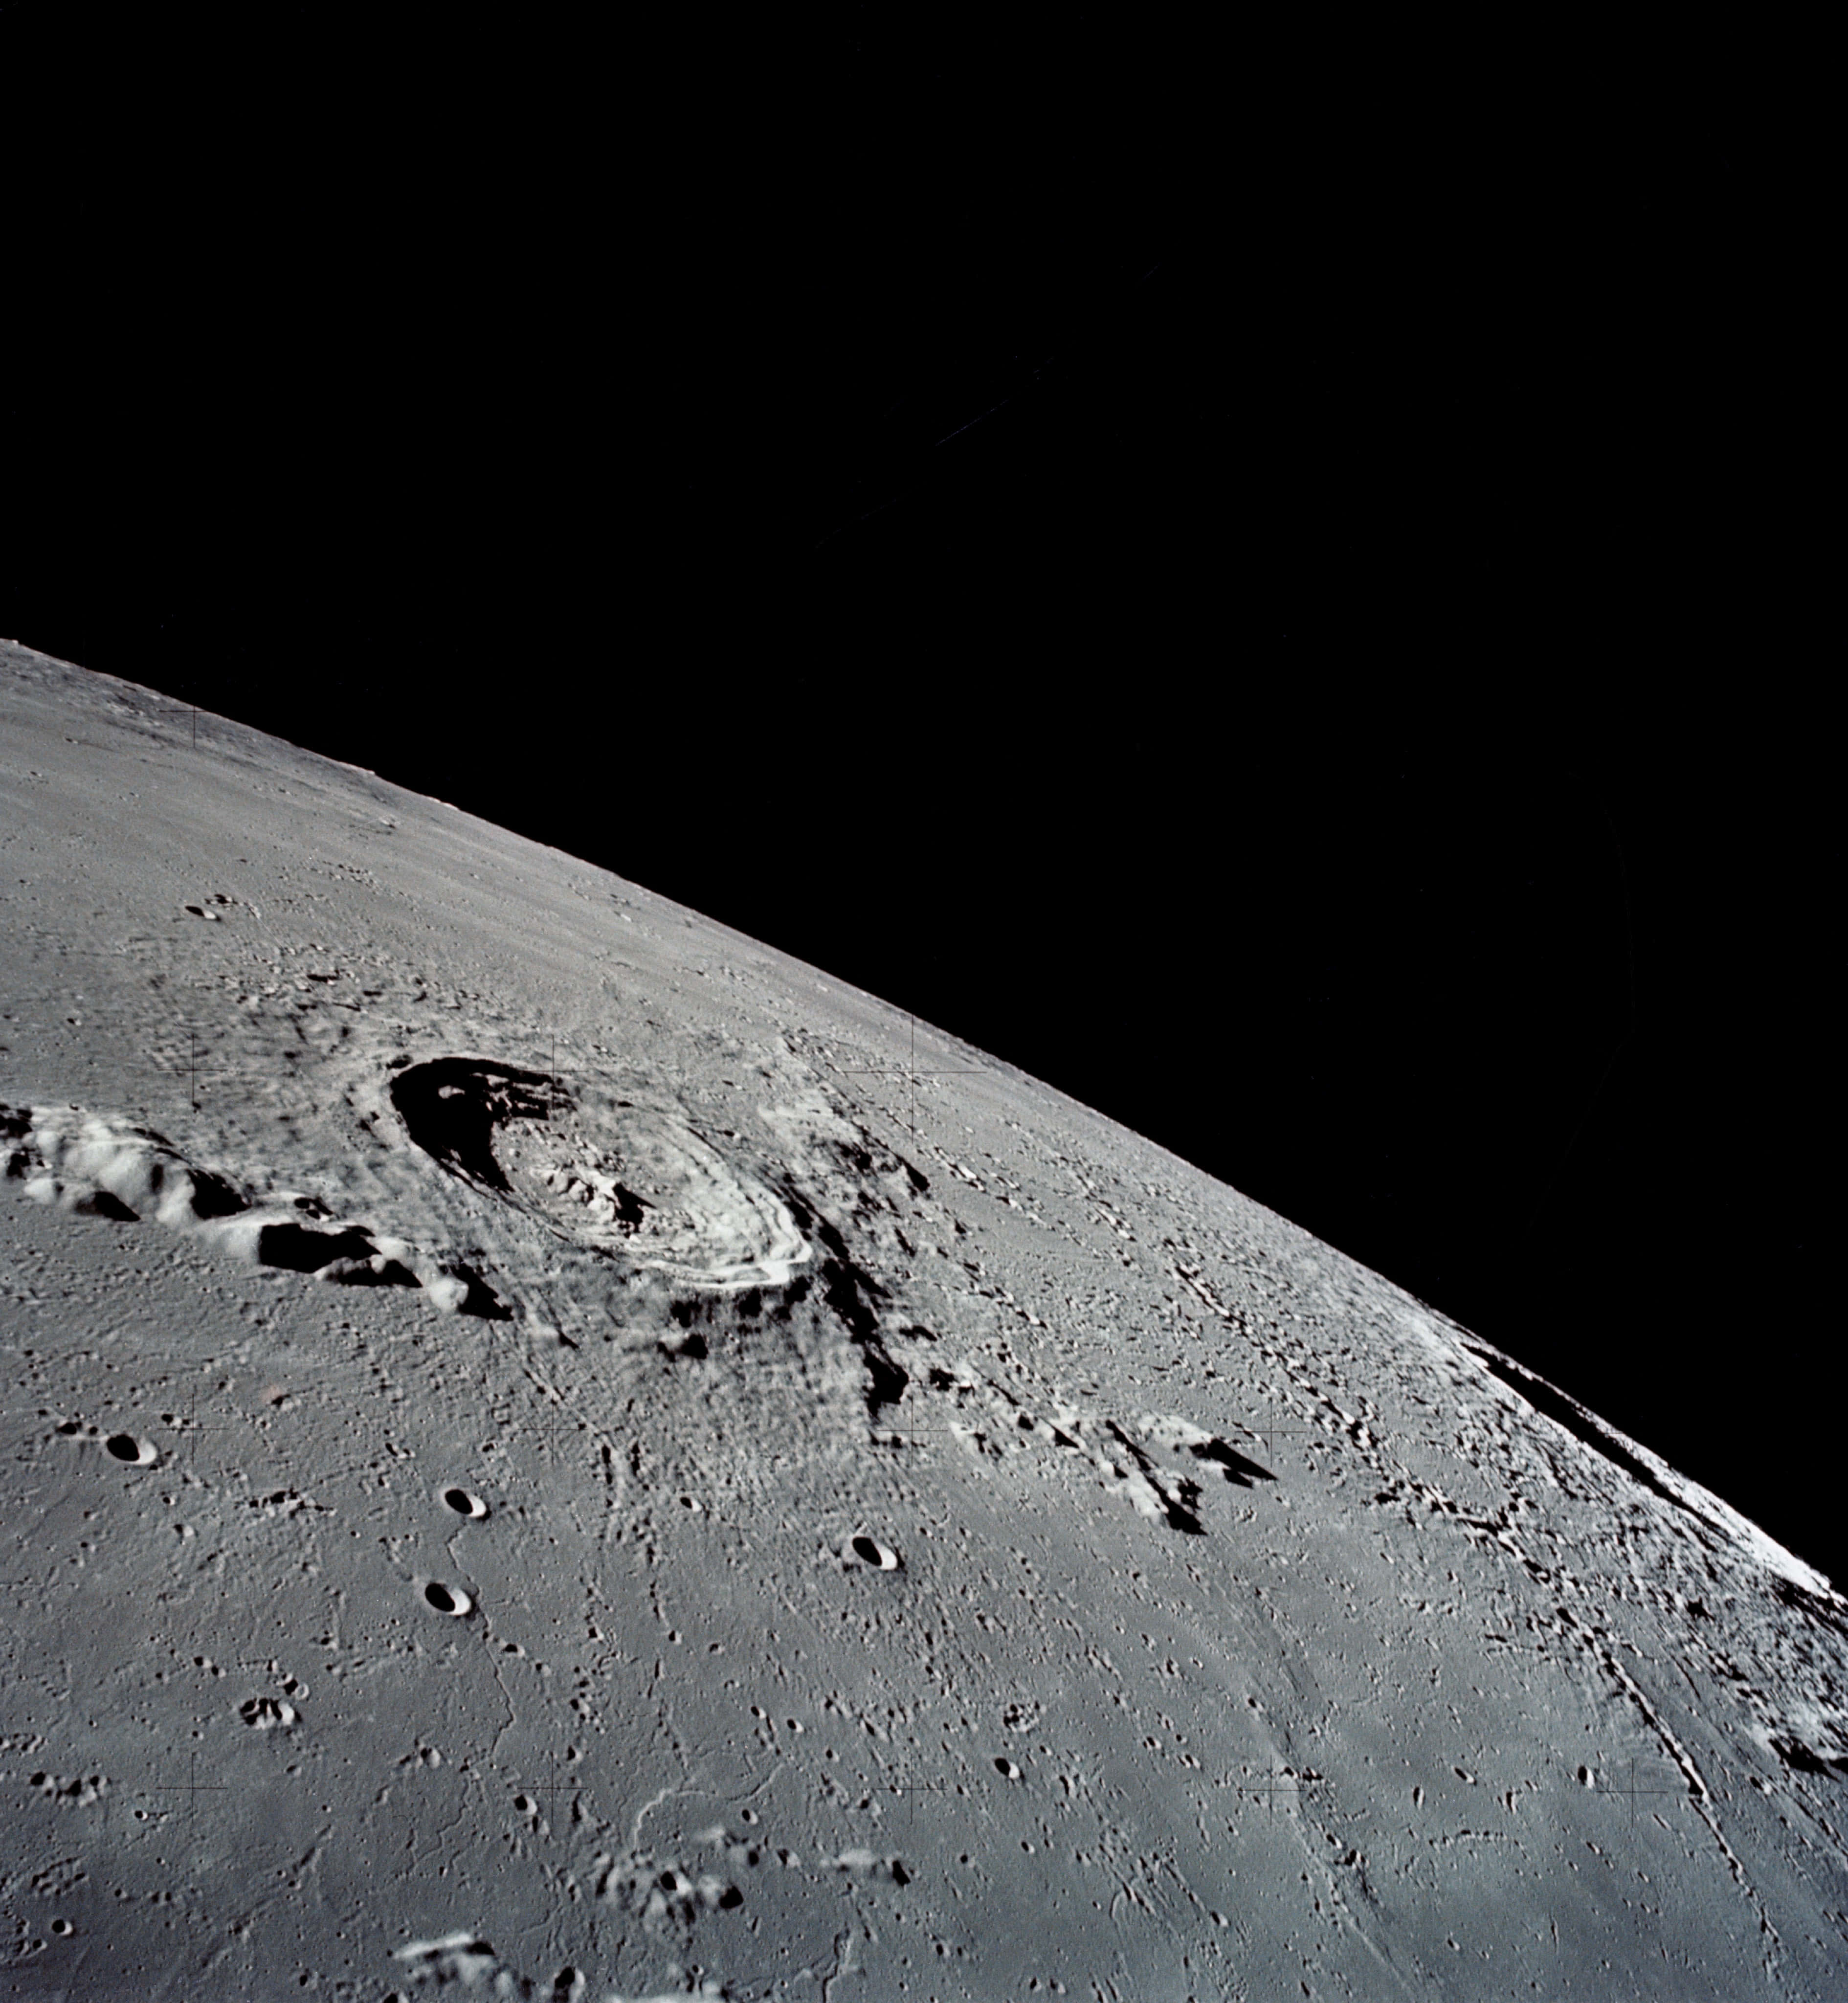 Caption: Stunning Lunar Surface Image Wallpaper